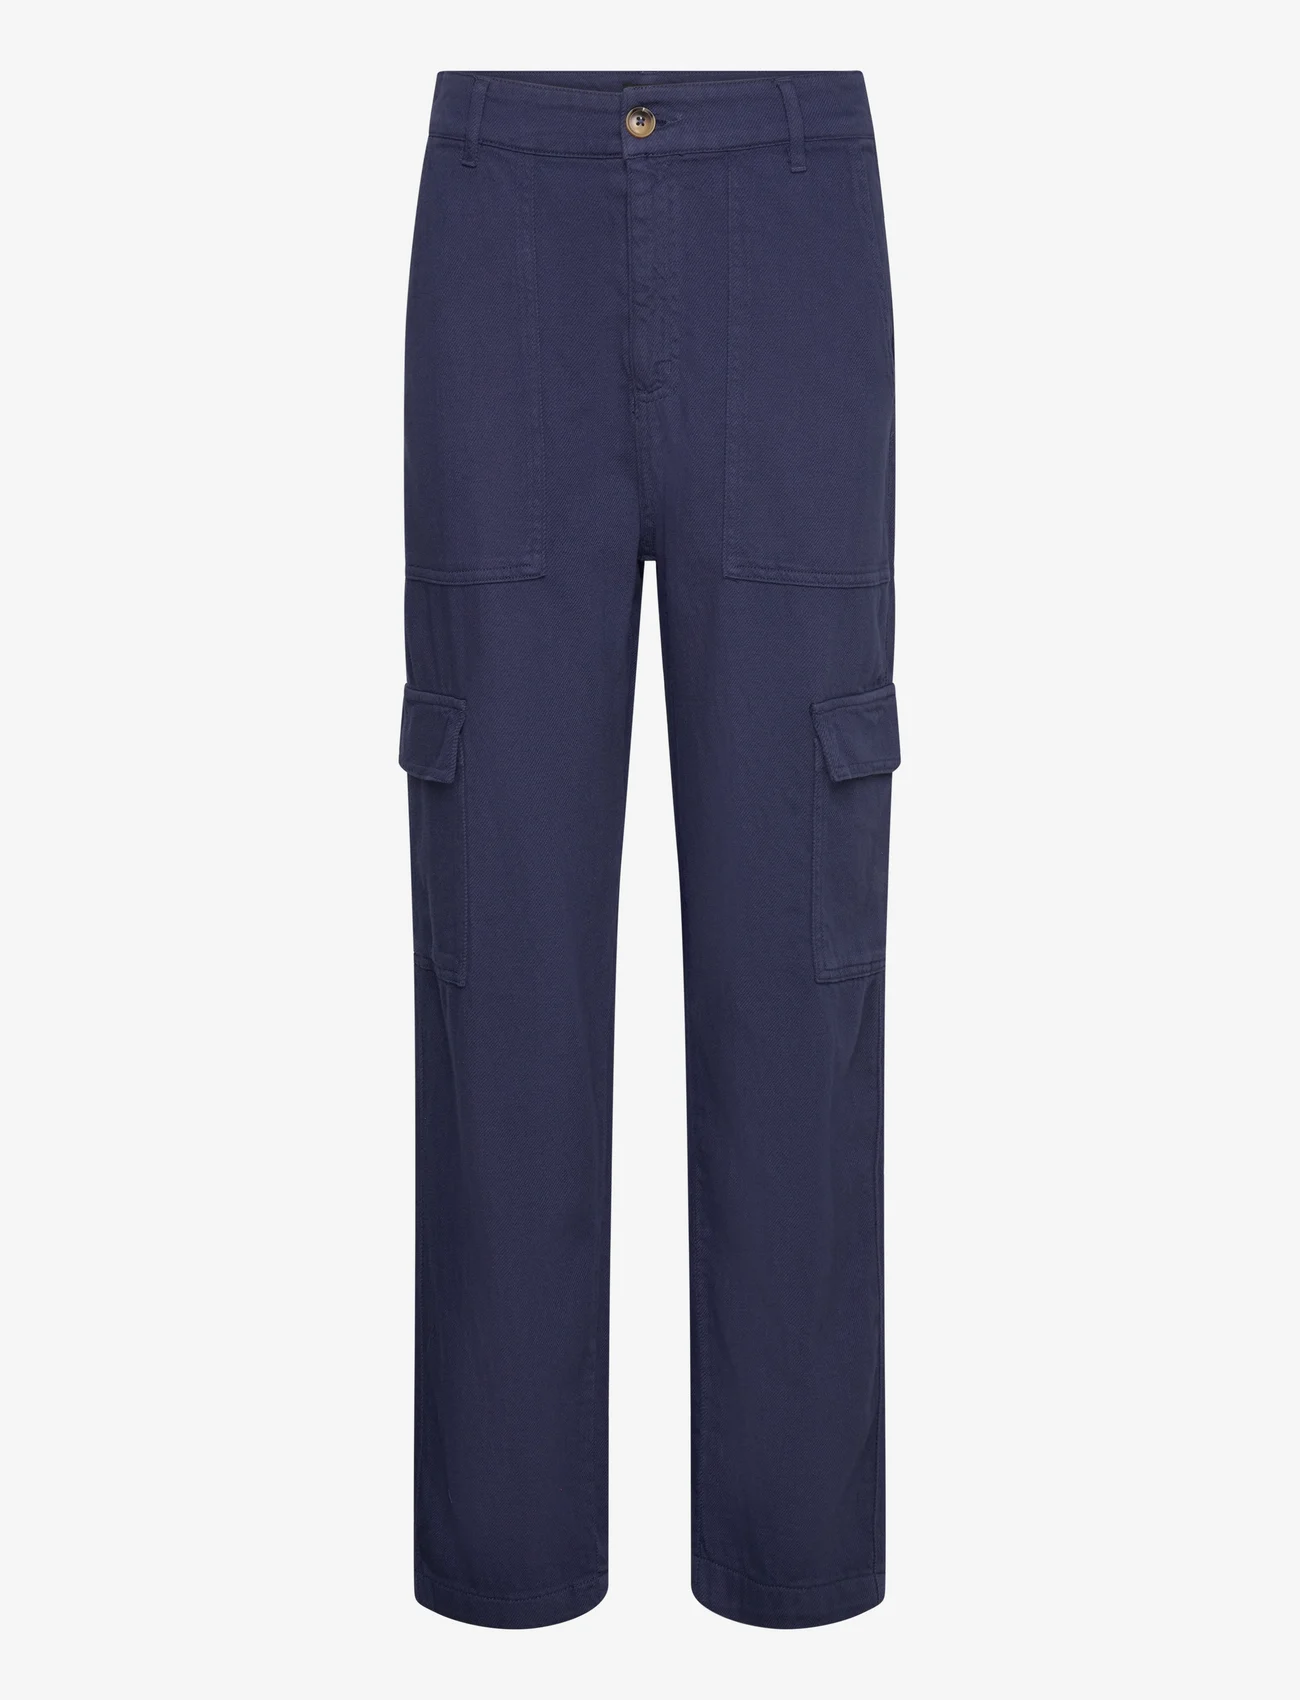 Lindex - Trouser Suzette patch pocket - cargo püksid - dark blue - 0